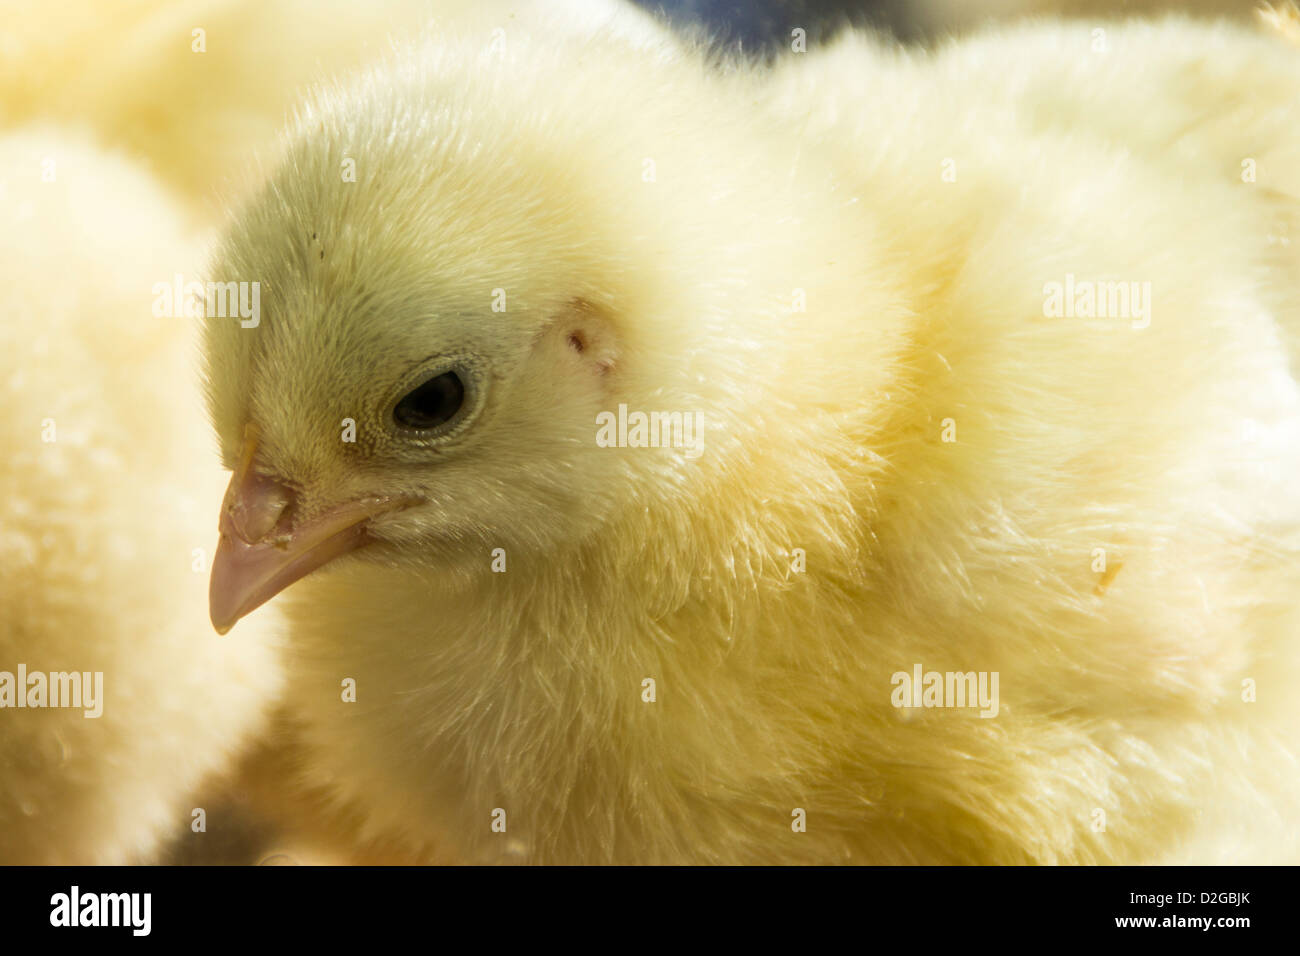 Portrait of a chicken Stock Photo